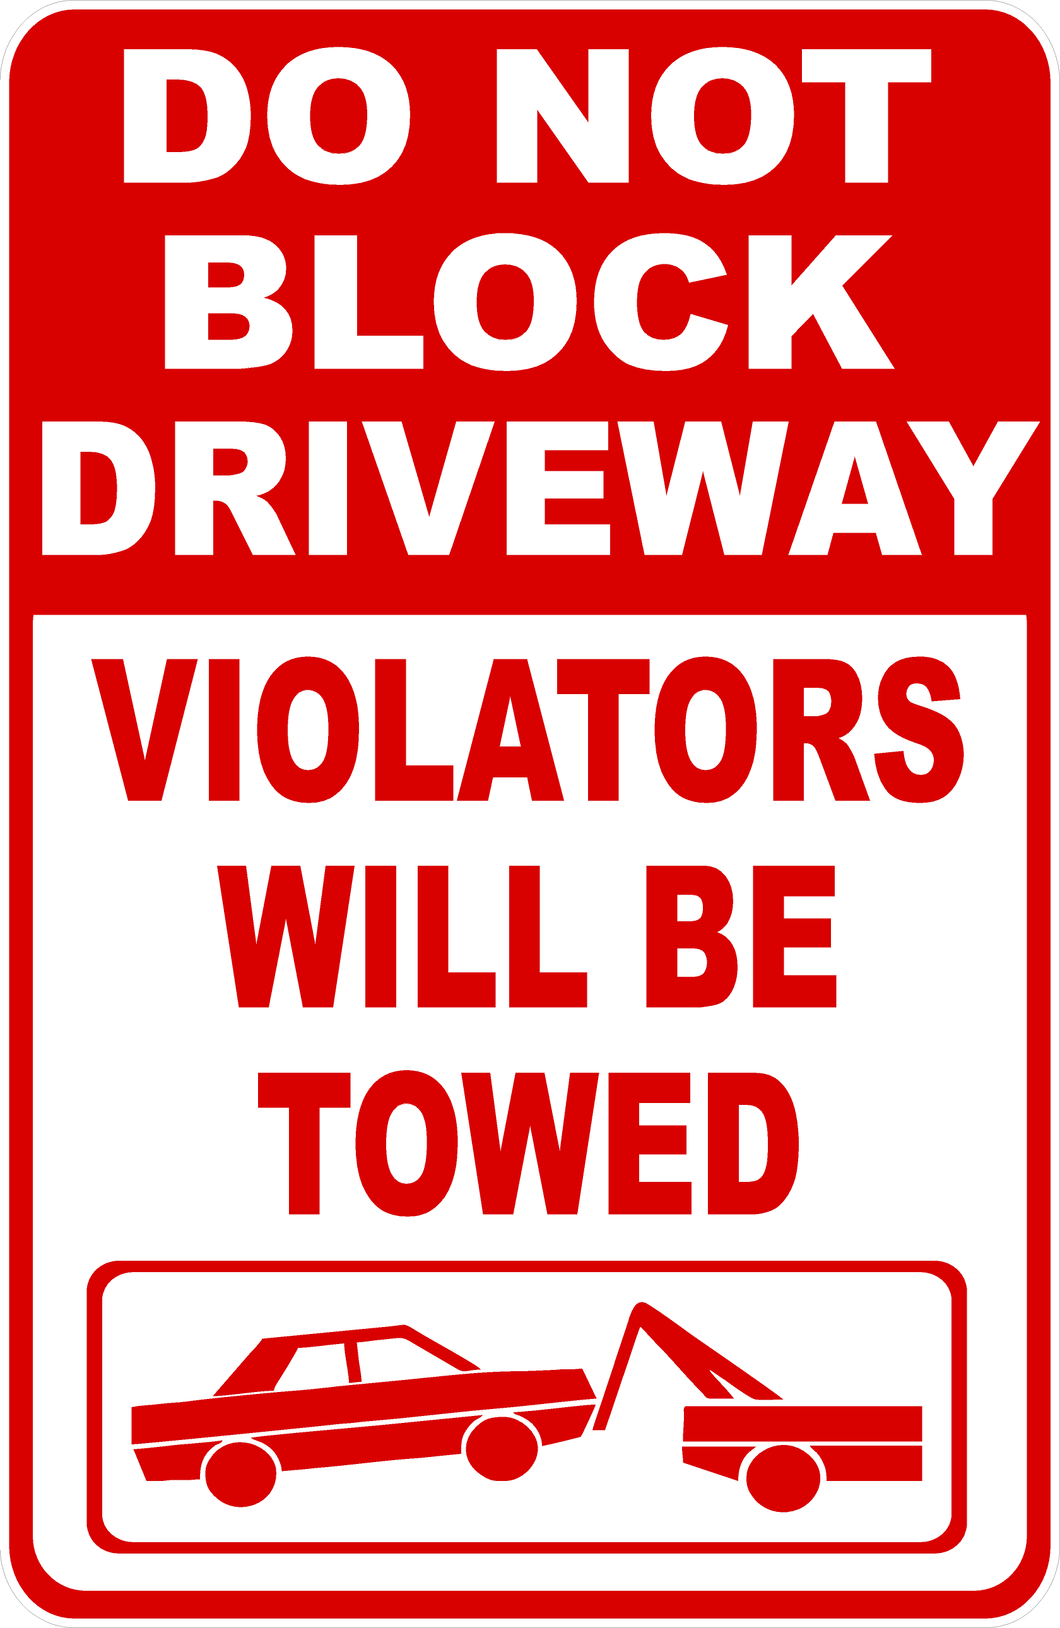 Do Not Block Driveway Violators Will Be Towed Sign